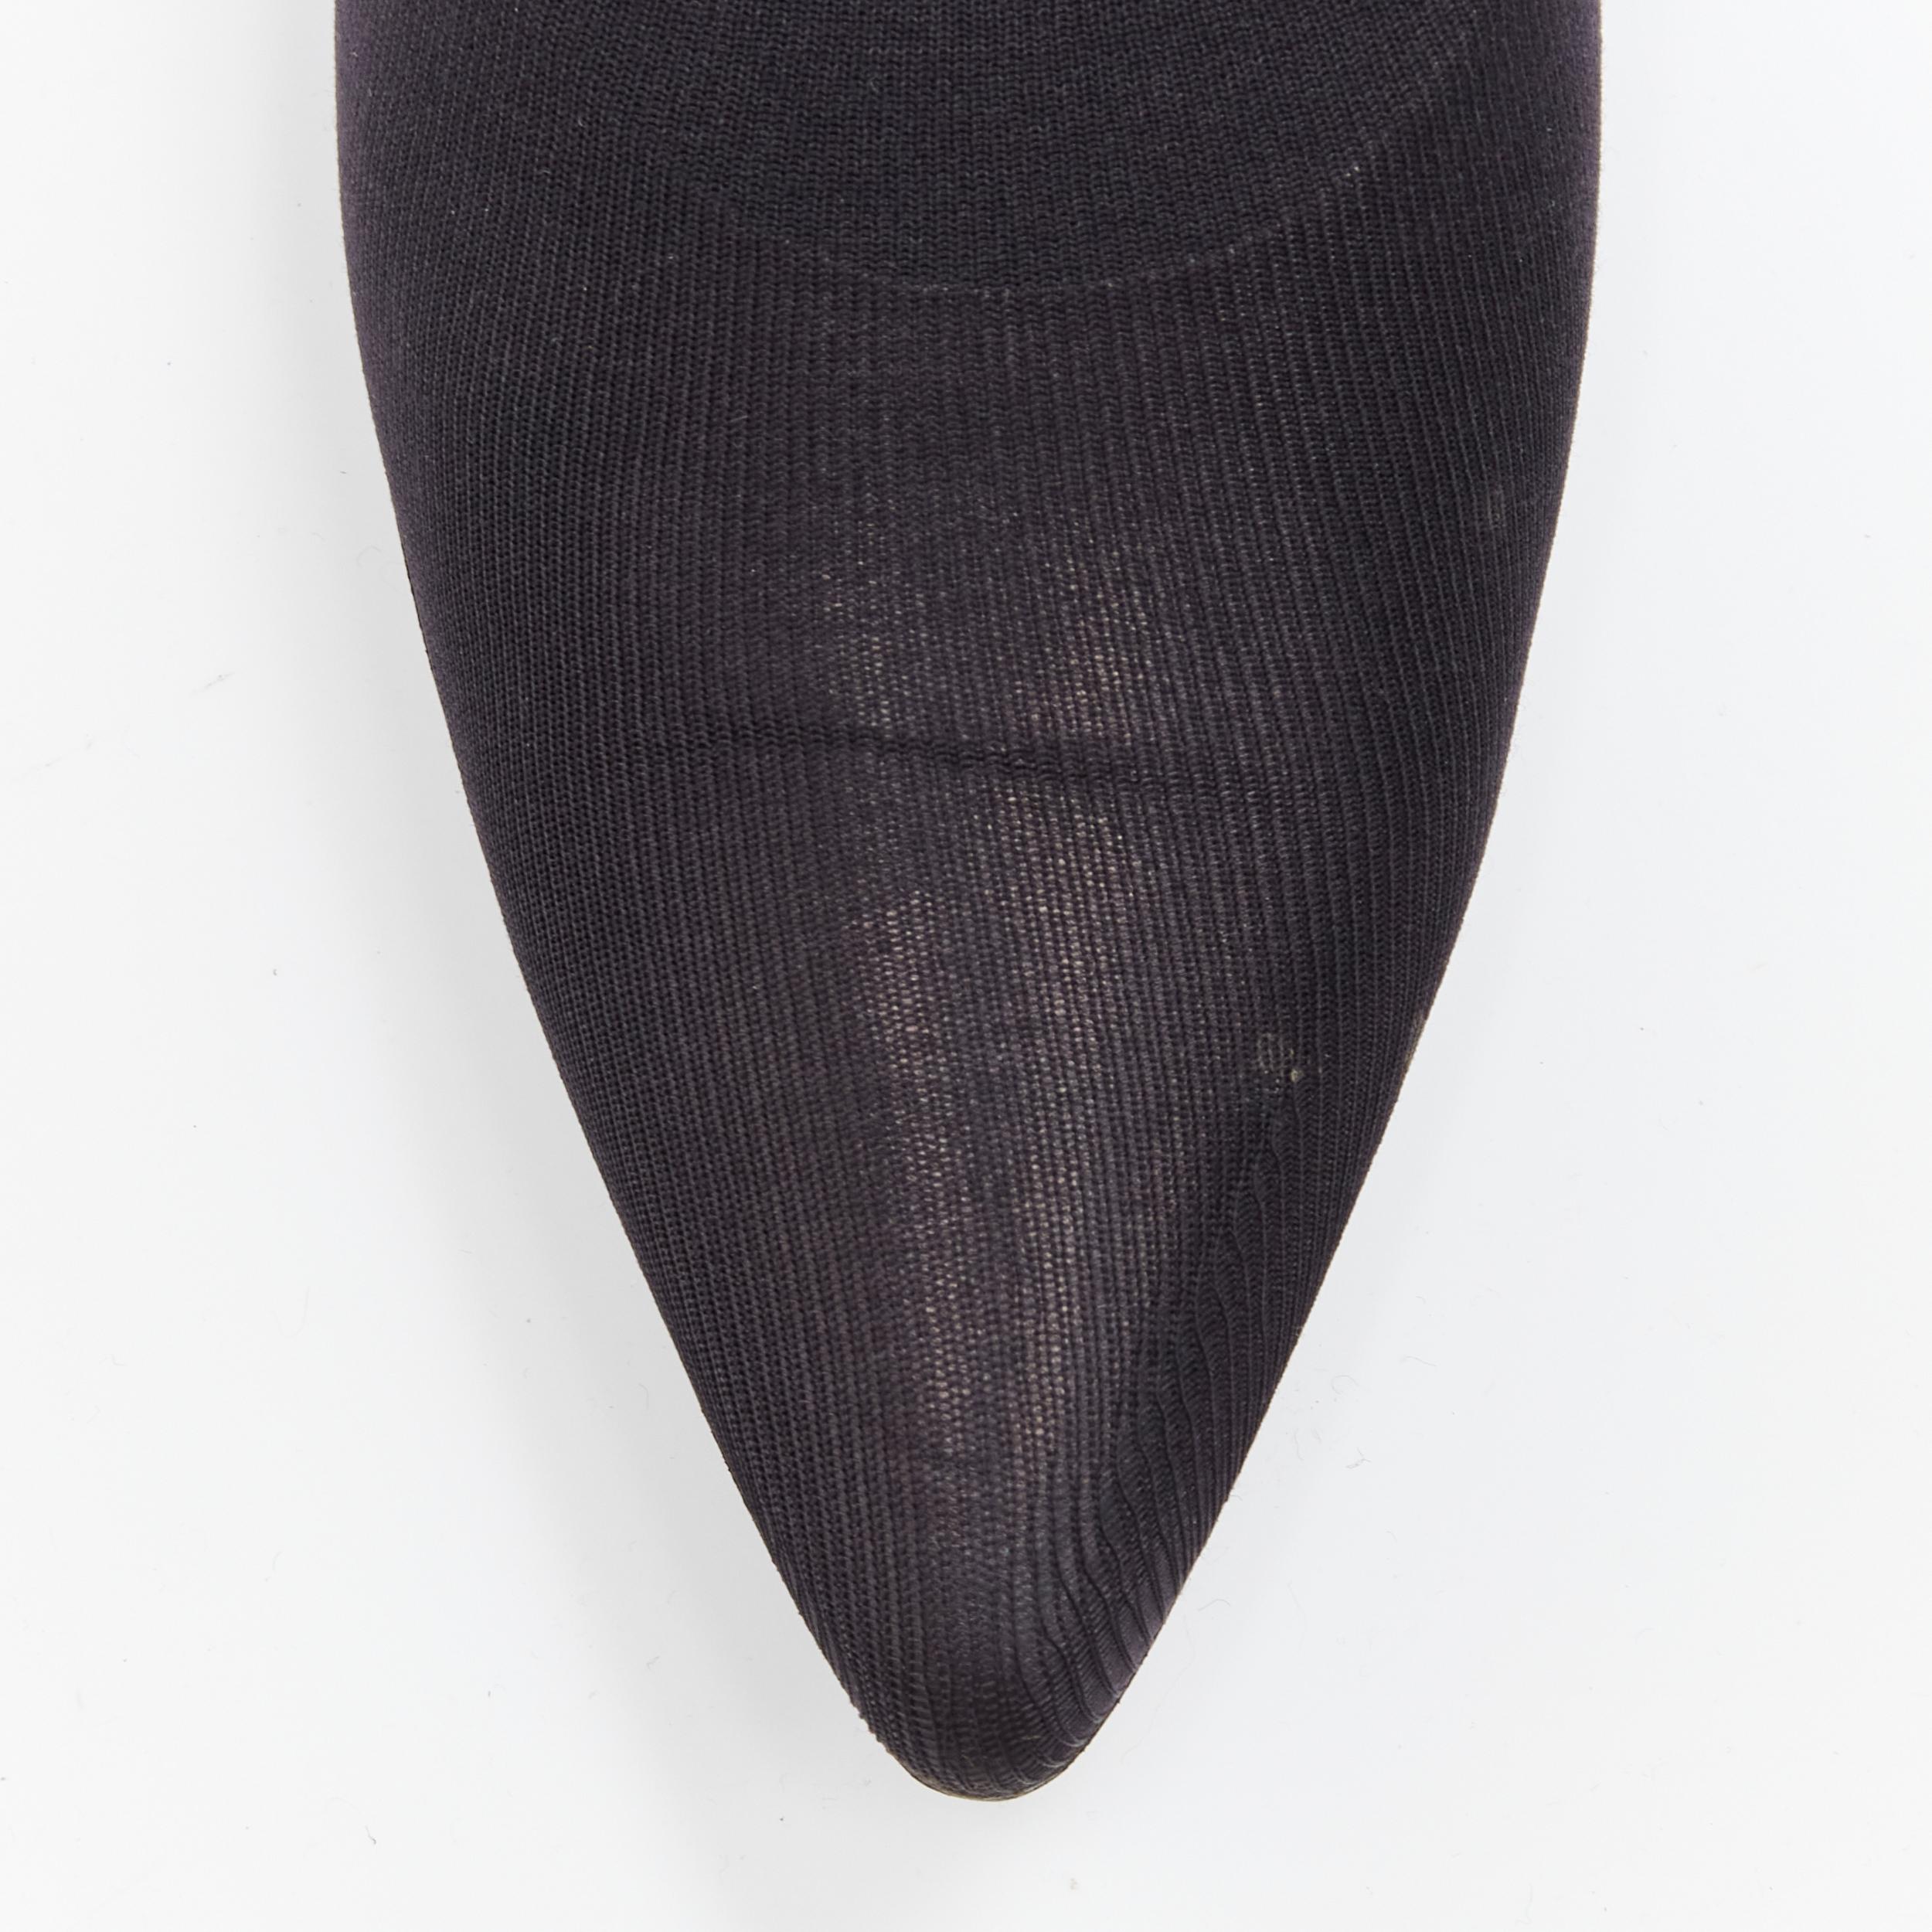 HELMUT LANG Vintage black stretchy stocking knit mid heel knee high boots EU36.5 2